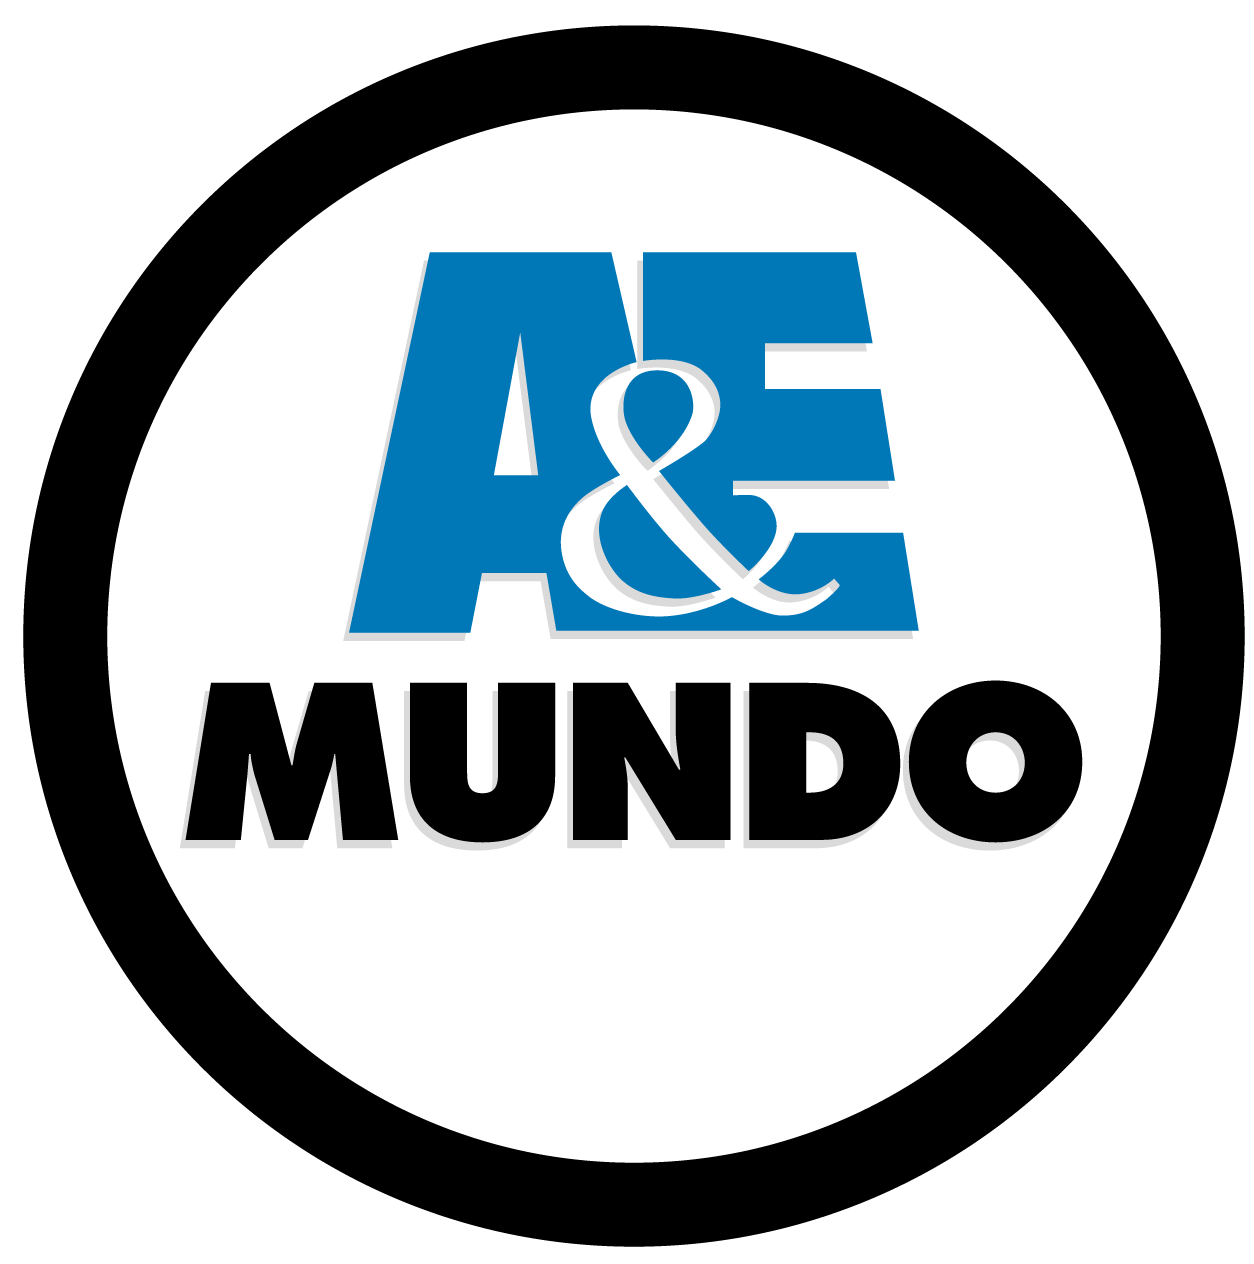 A&E Logo - A&E (Latin America) | Logopedia | FANDOM powered by Wikia